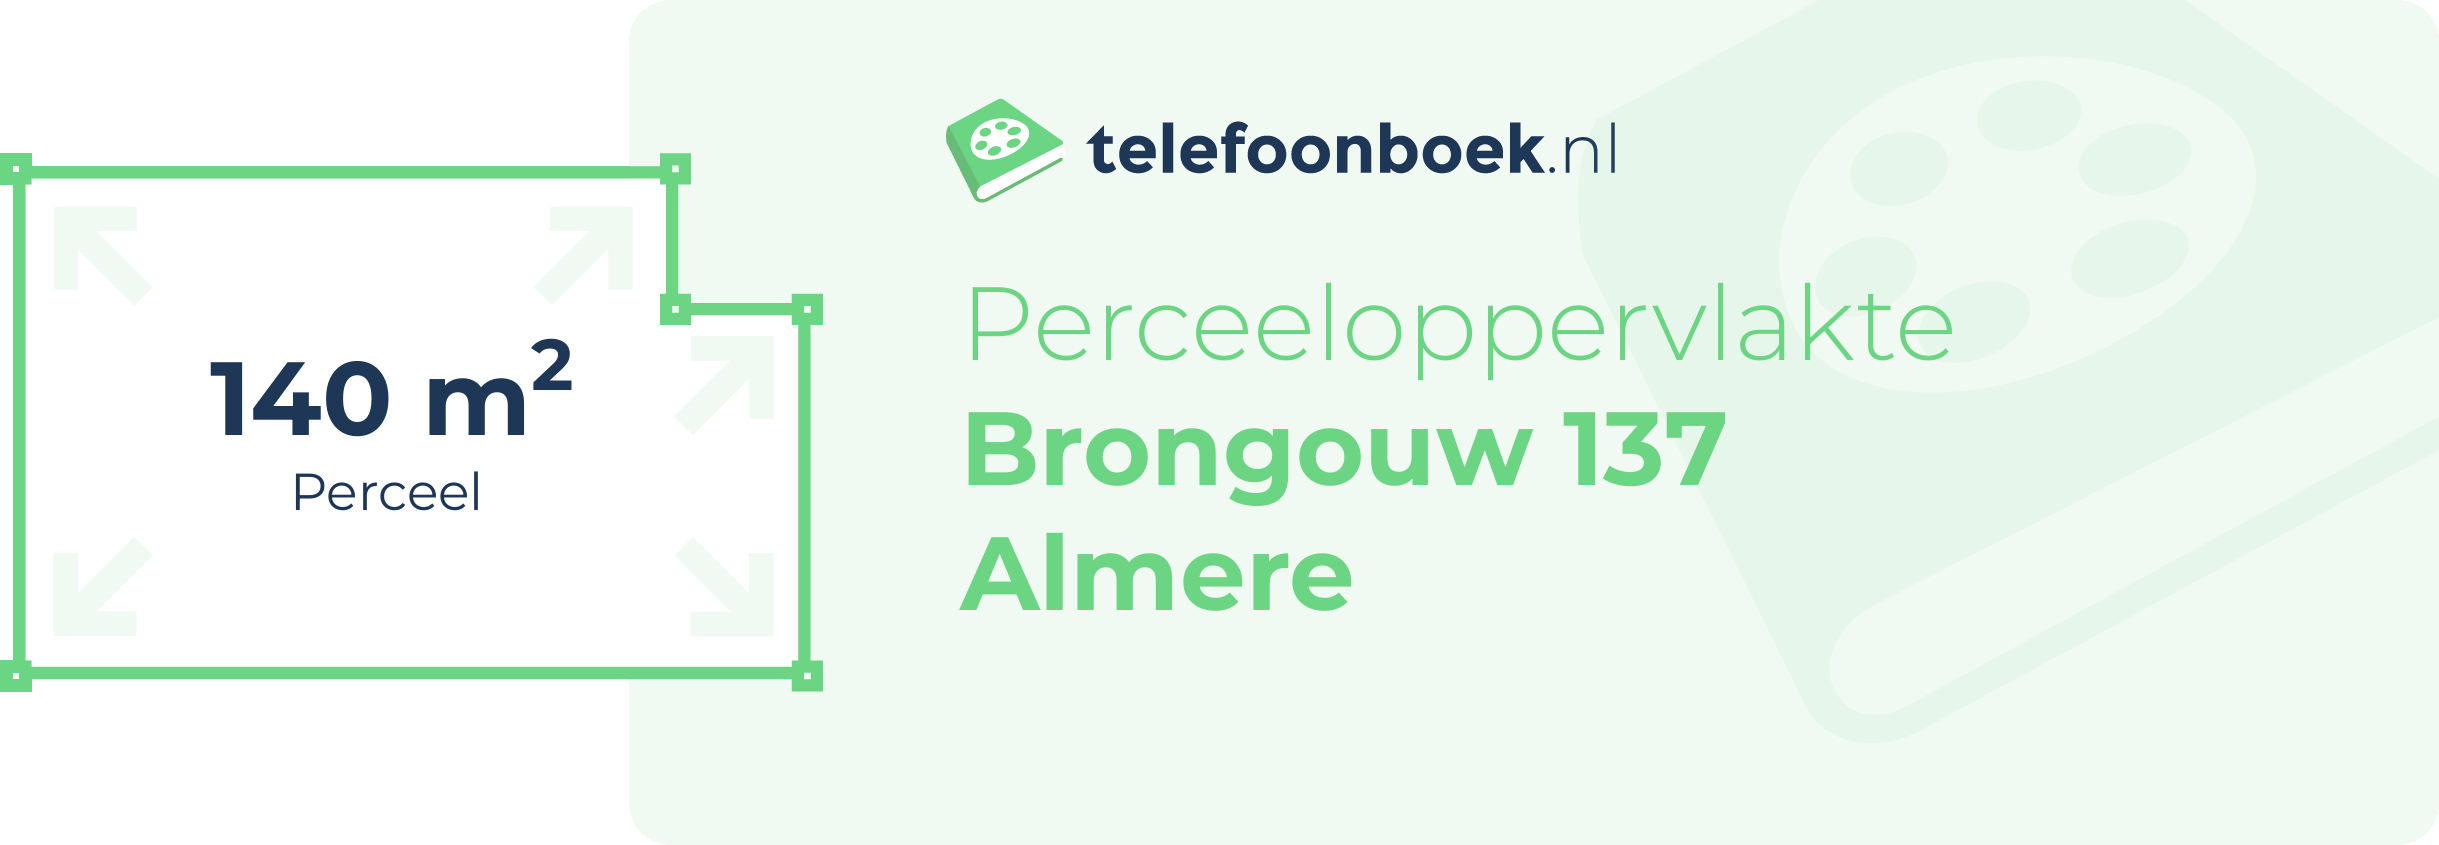 Perceeloppervlakte Brongouw 137 Almere